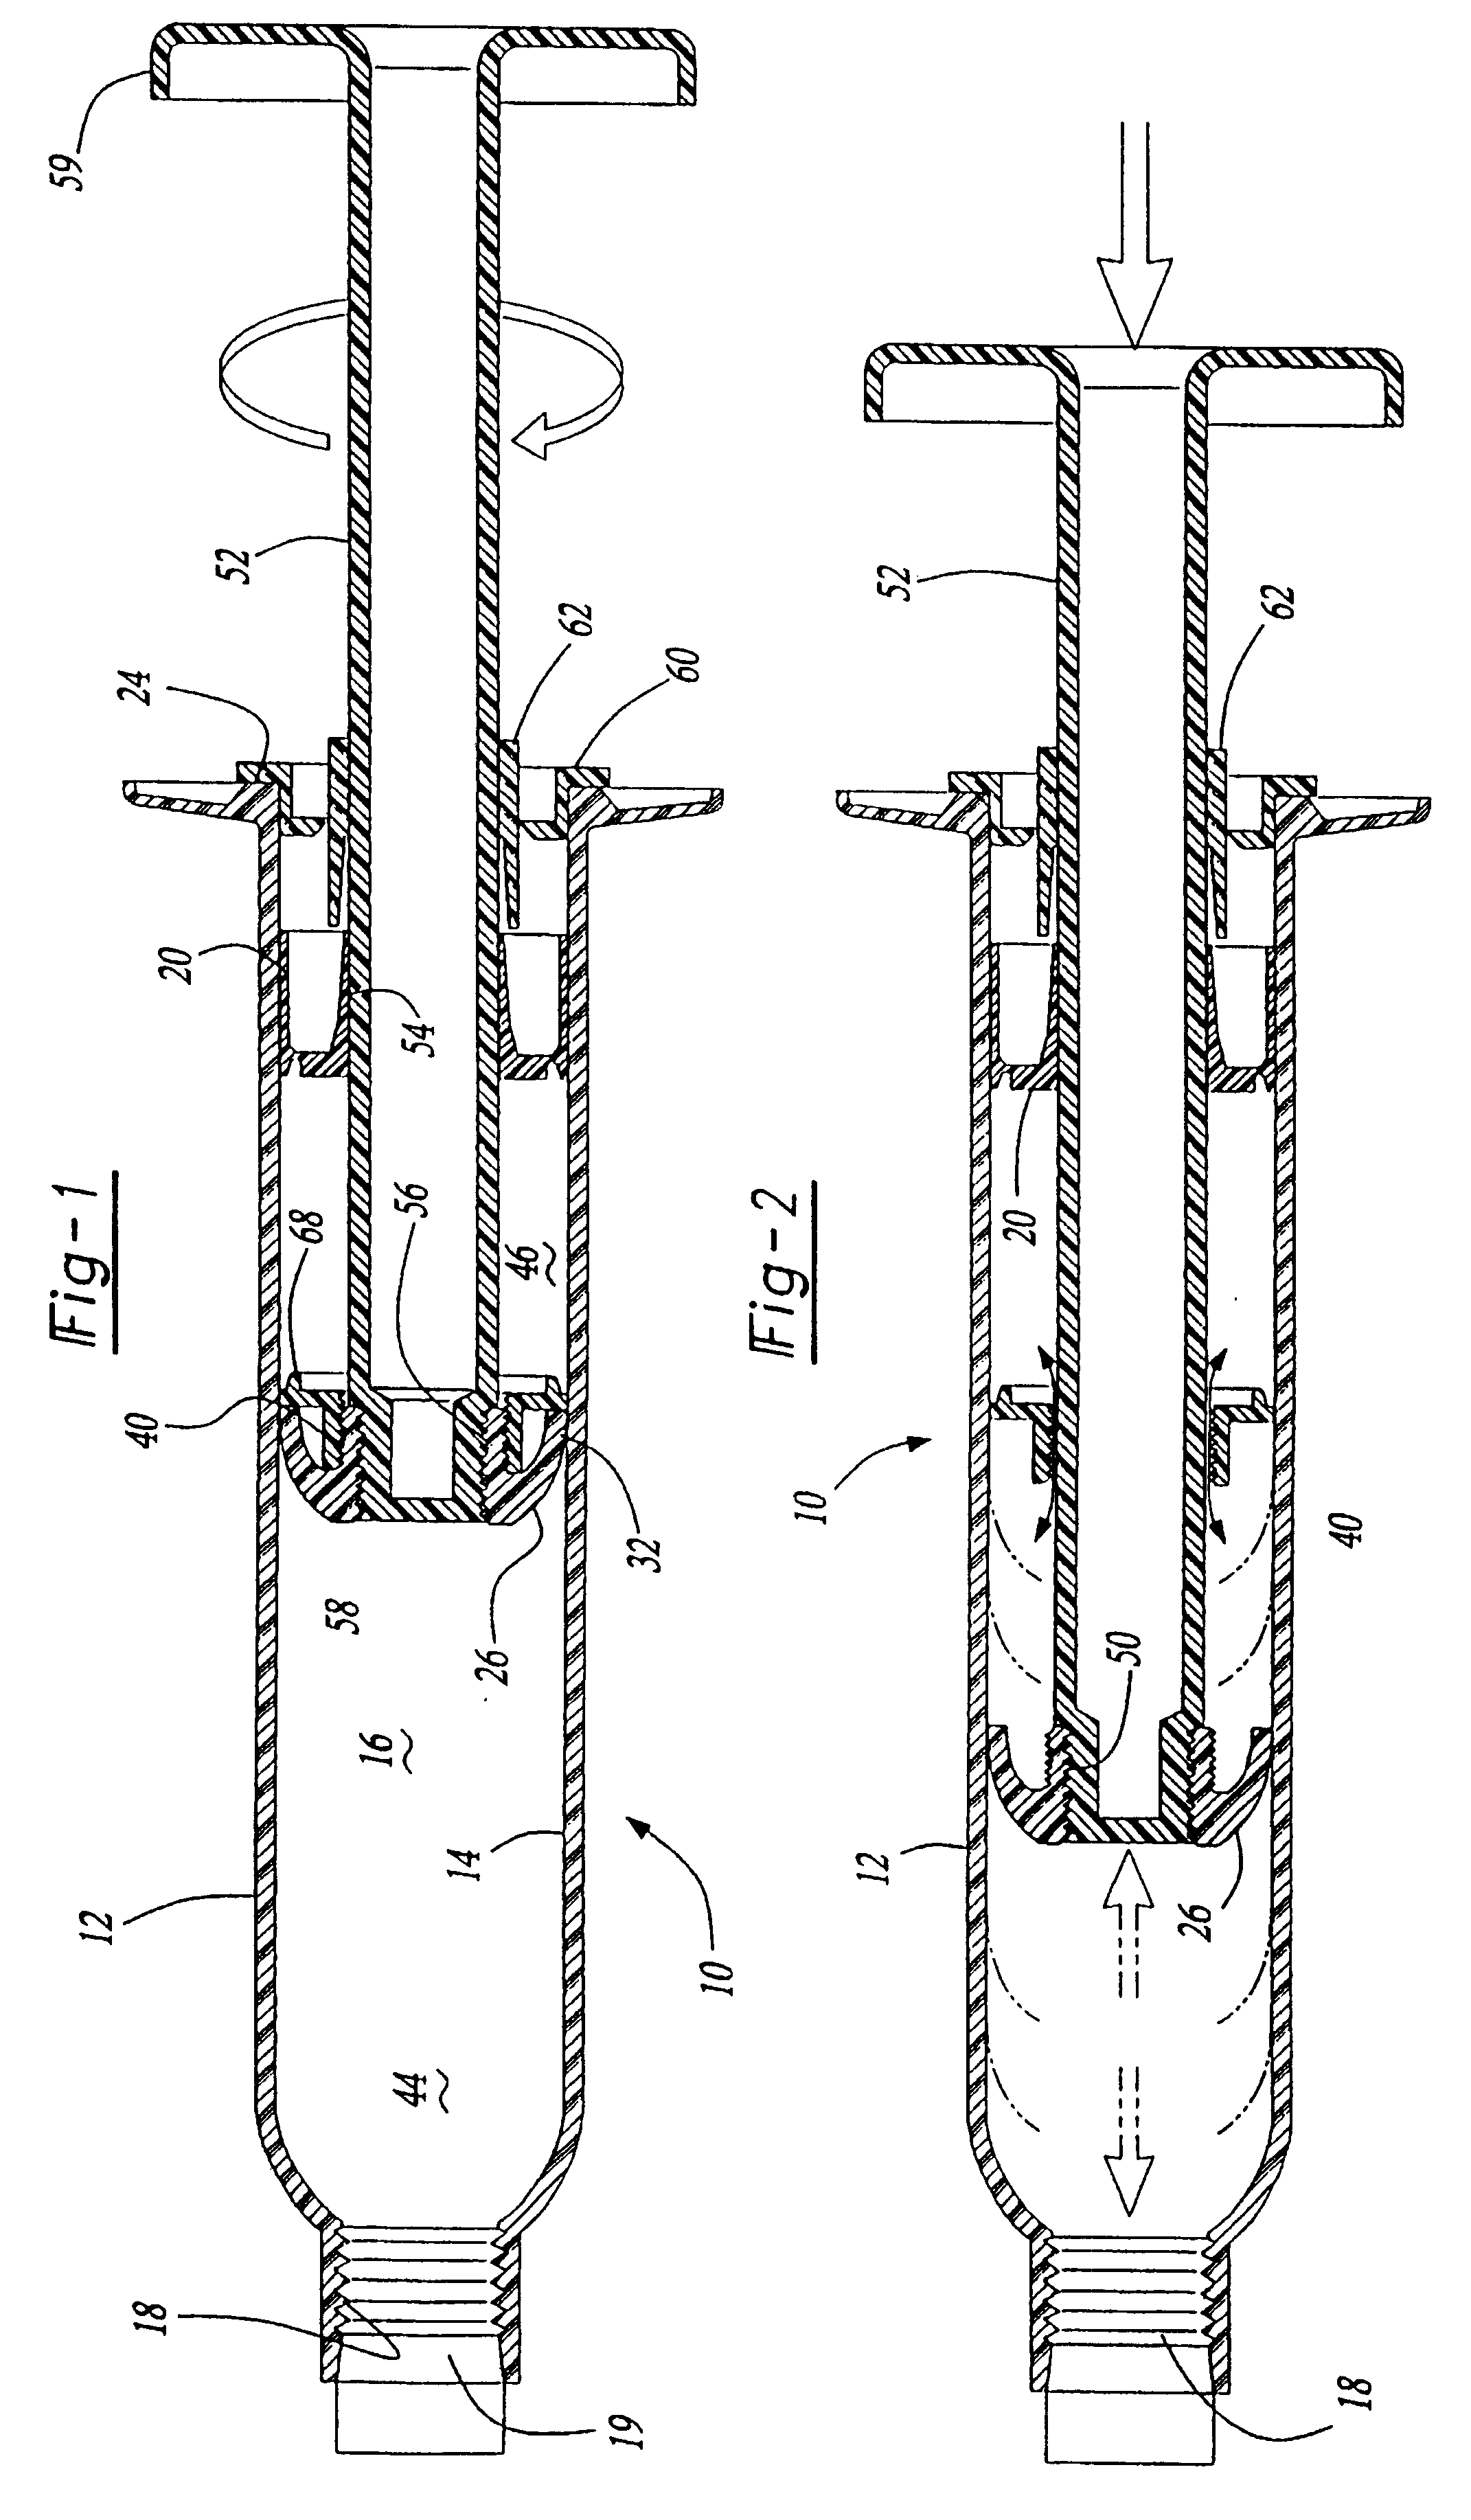 Multiple part manual dispensing syringe